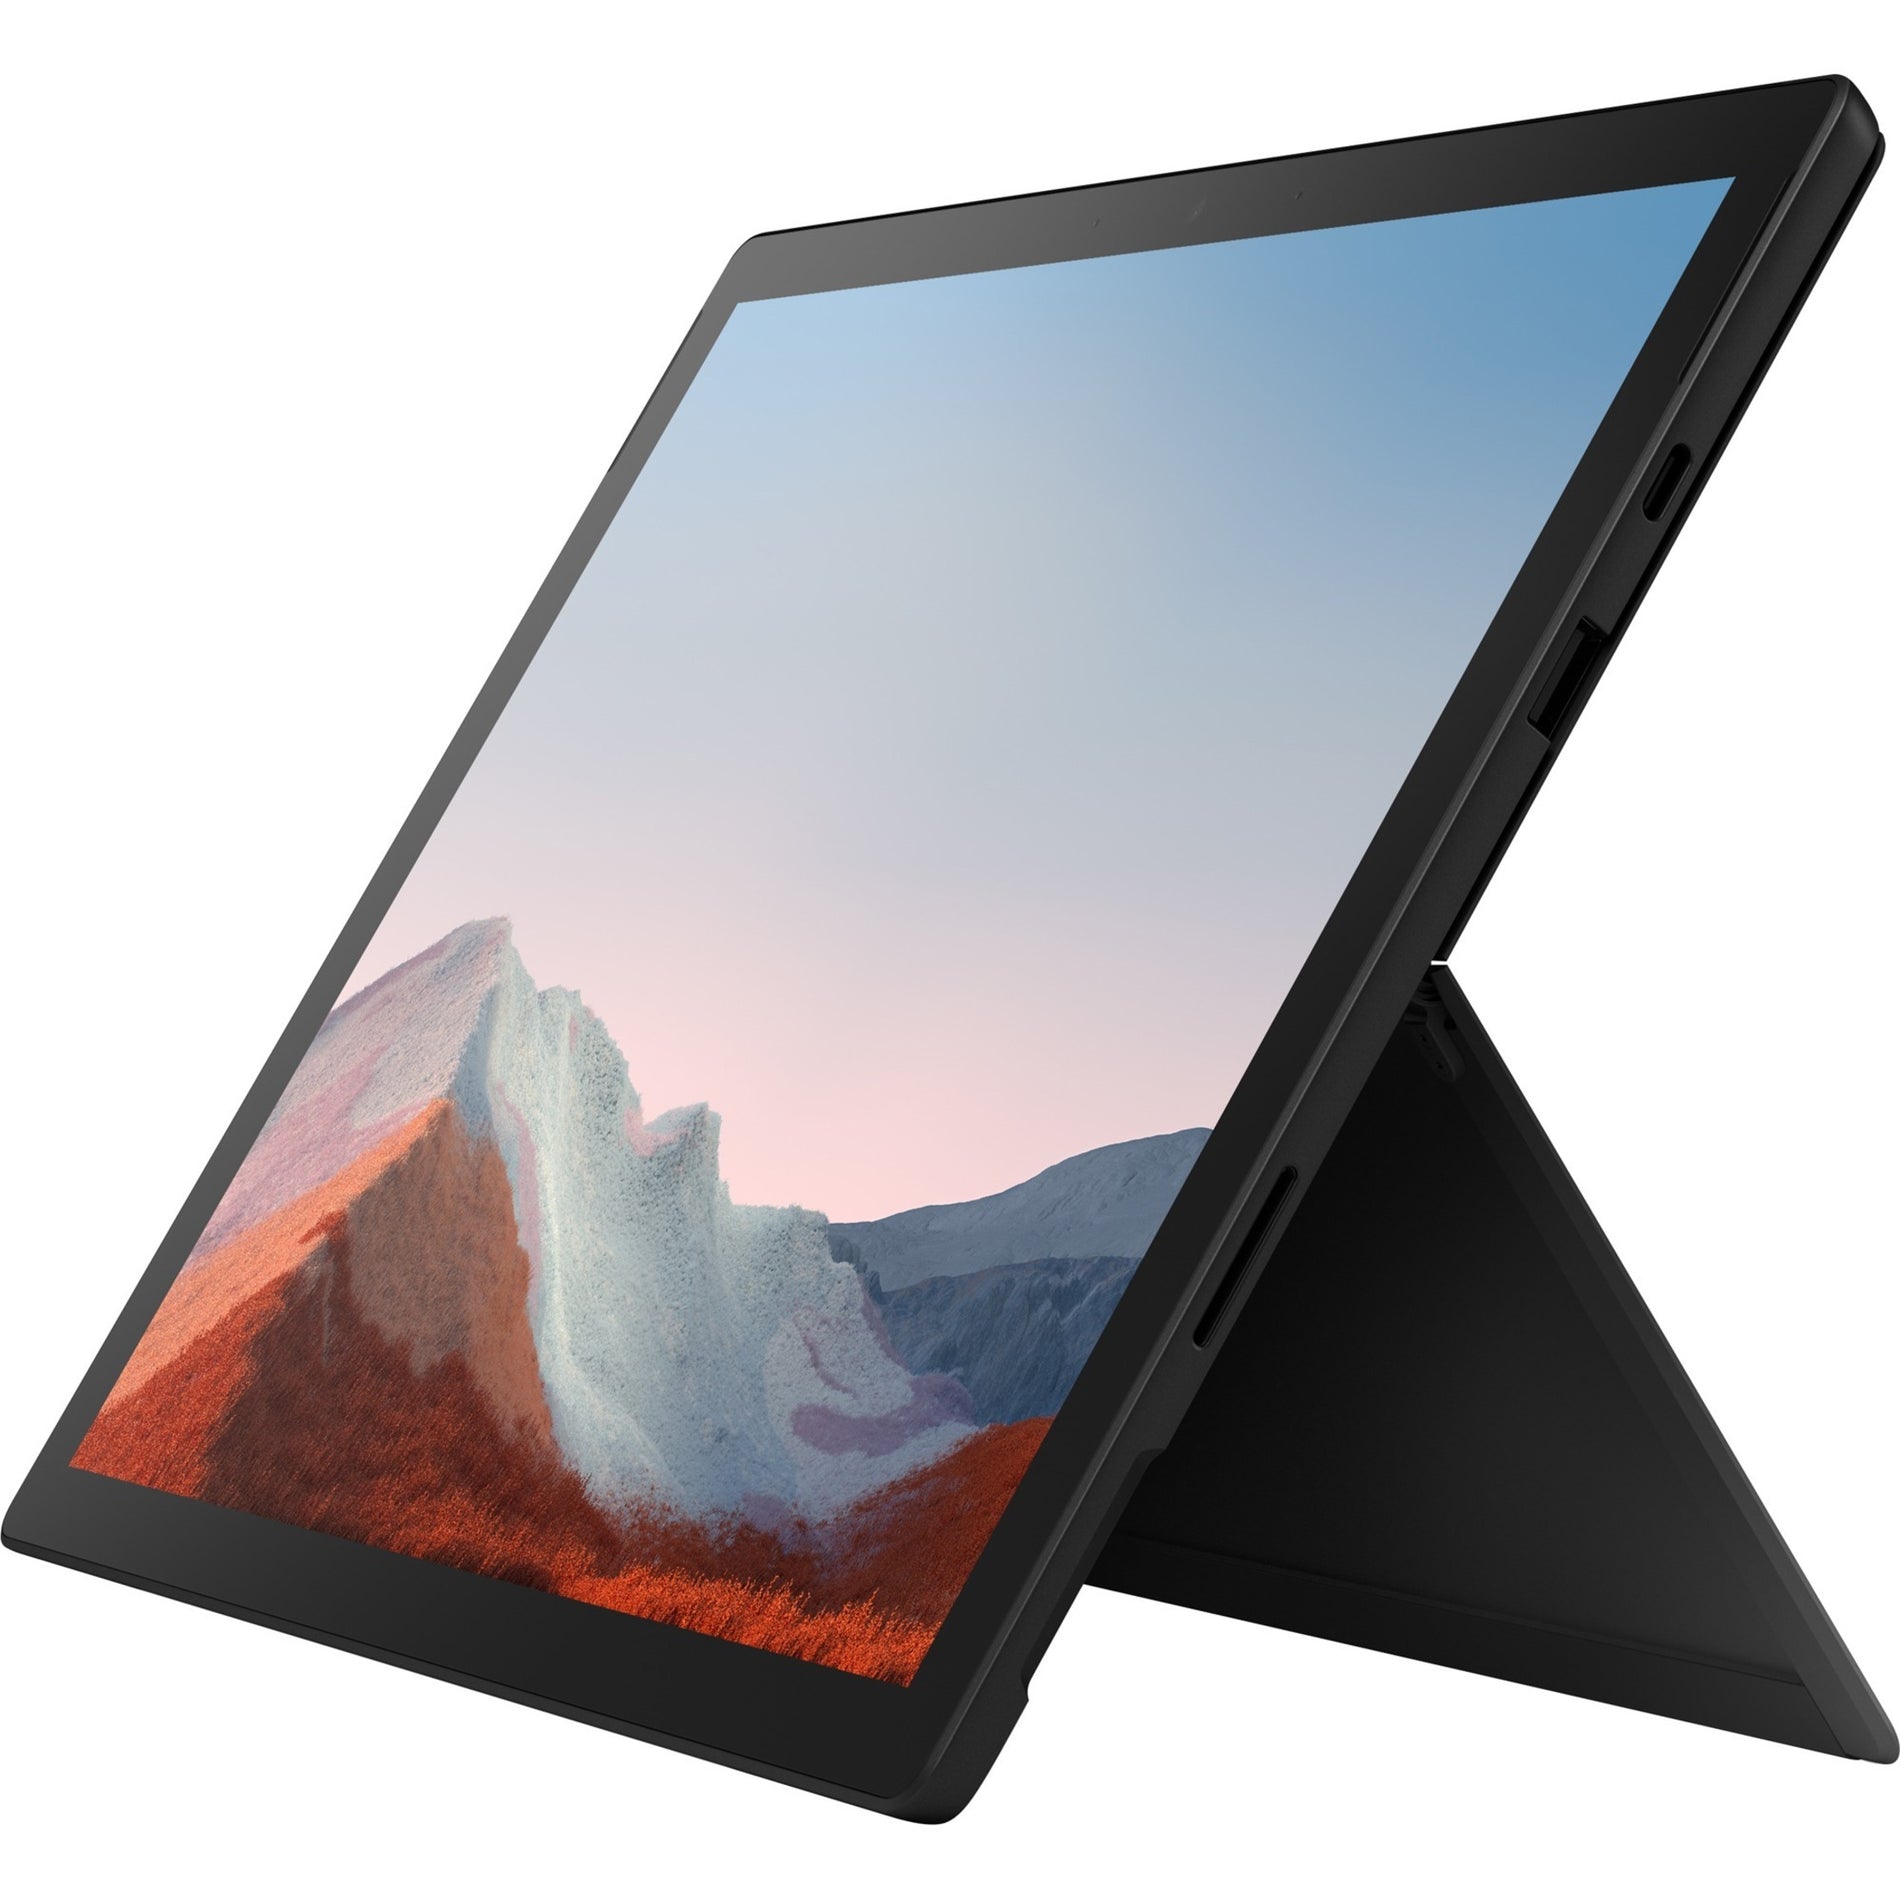 Microsoft 1XX-00002 Surface Pro 7+ Tablet, 12.3" PixelSense Display, Core i5, 8GB RAM, 256GB SSD, Windows 10 Pro